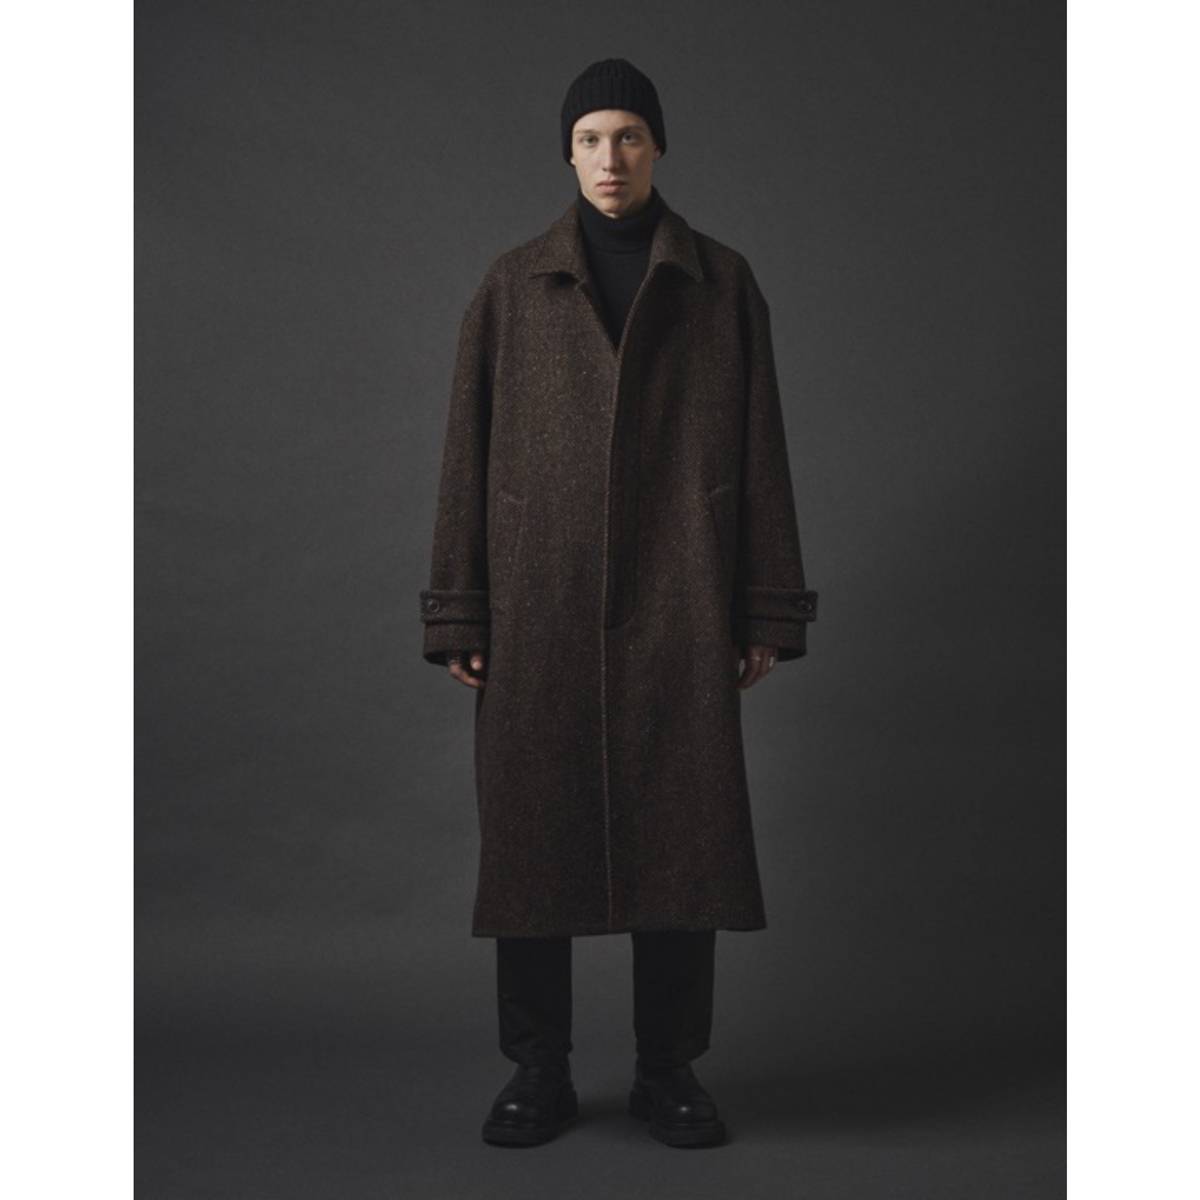 lownn Overcoat(Brown Herringbone) | lownn (ローン) - 通販 - FEEL 